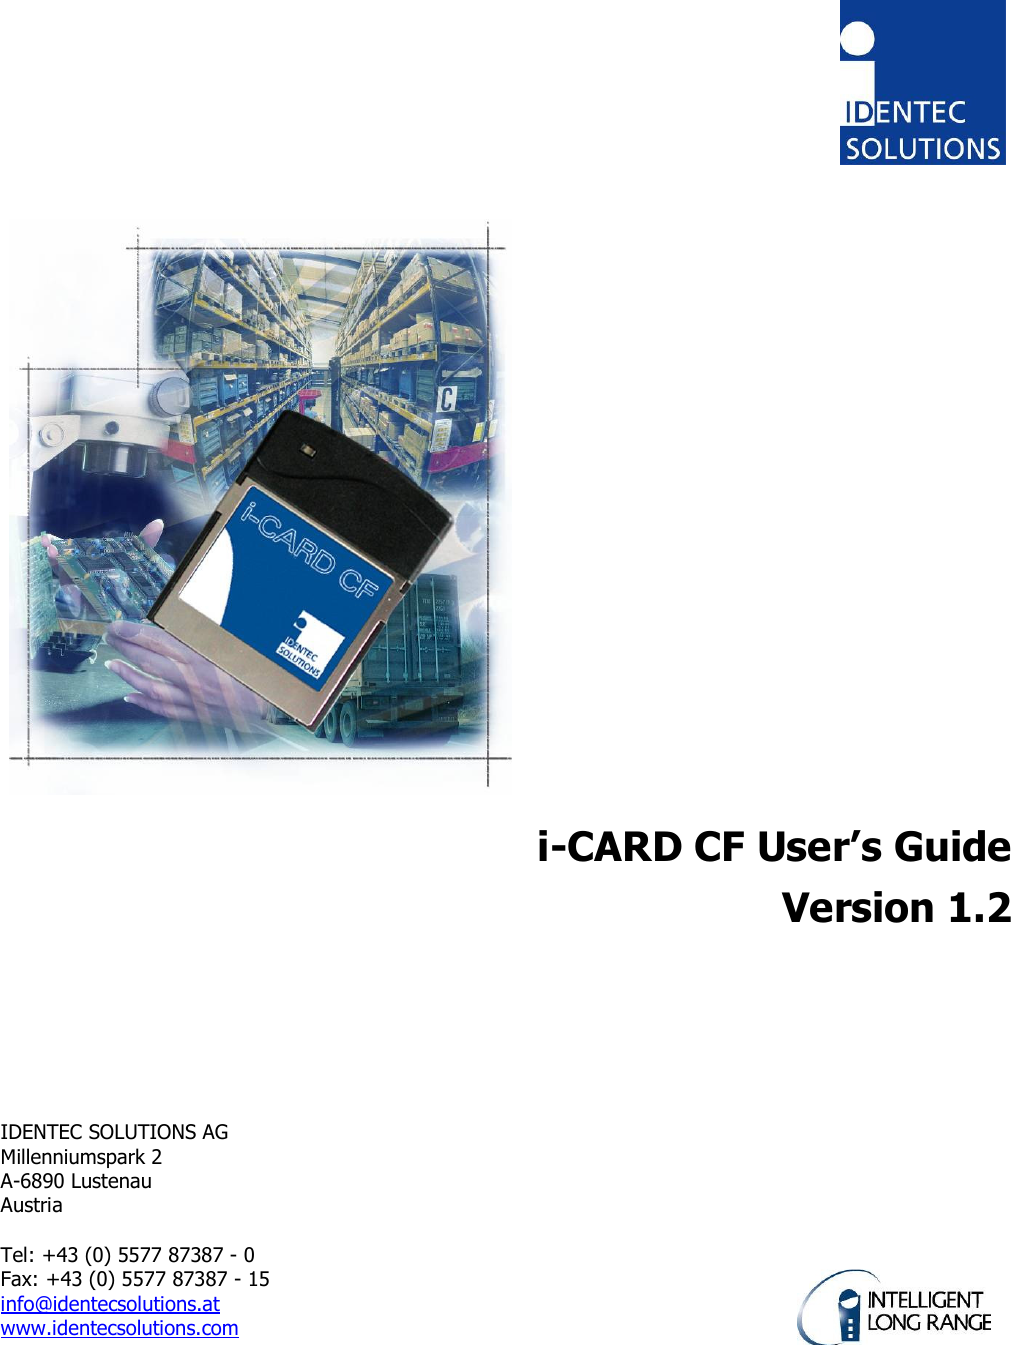              i-CARD CF User’s Guide Version 1.2     IDENTEC SOLUTIONS AG Millenniumspark 2 A-6890 Lustenau Austria  Tel: +43 (0) 5577 87387 - 0 Fax: +43 (0) 5577 87387 - 15 info@identecsolutions.at www.identecsolutions.com  